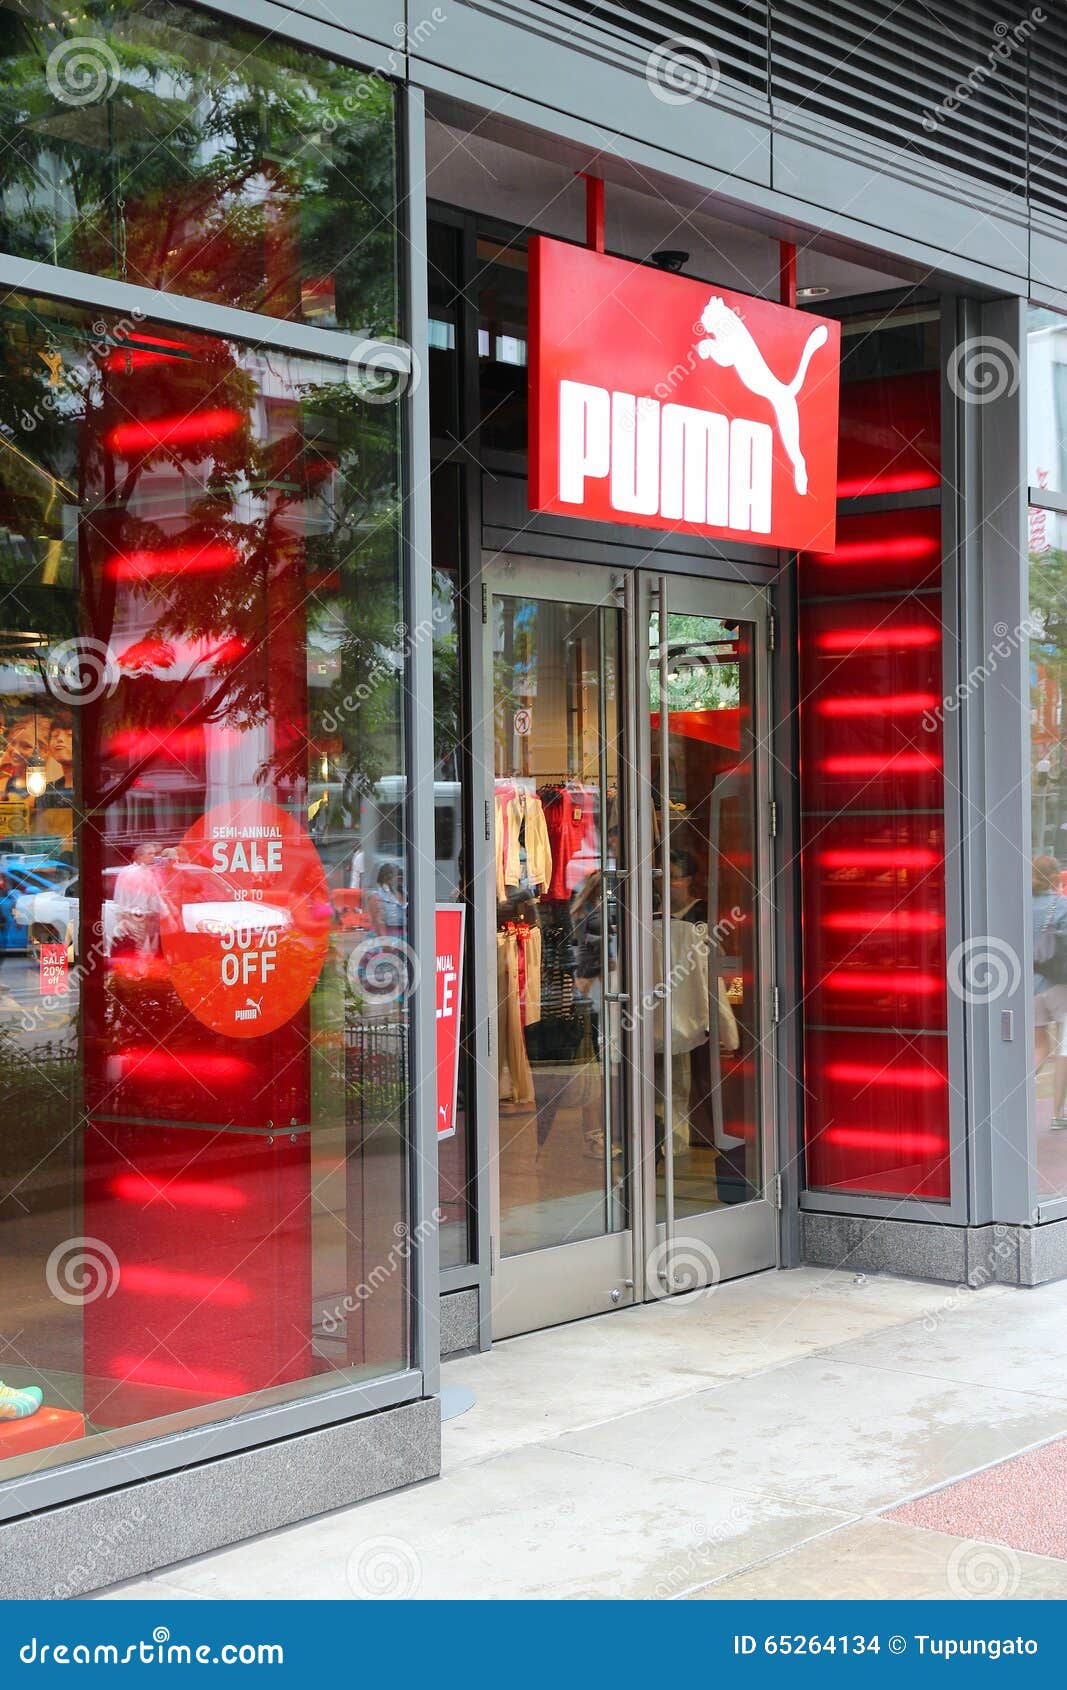 puma store united states